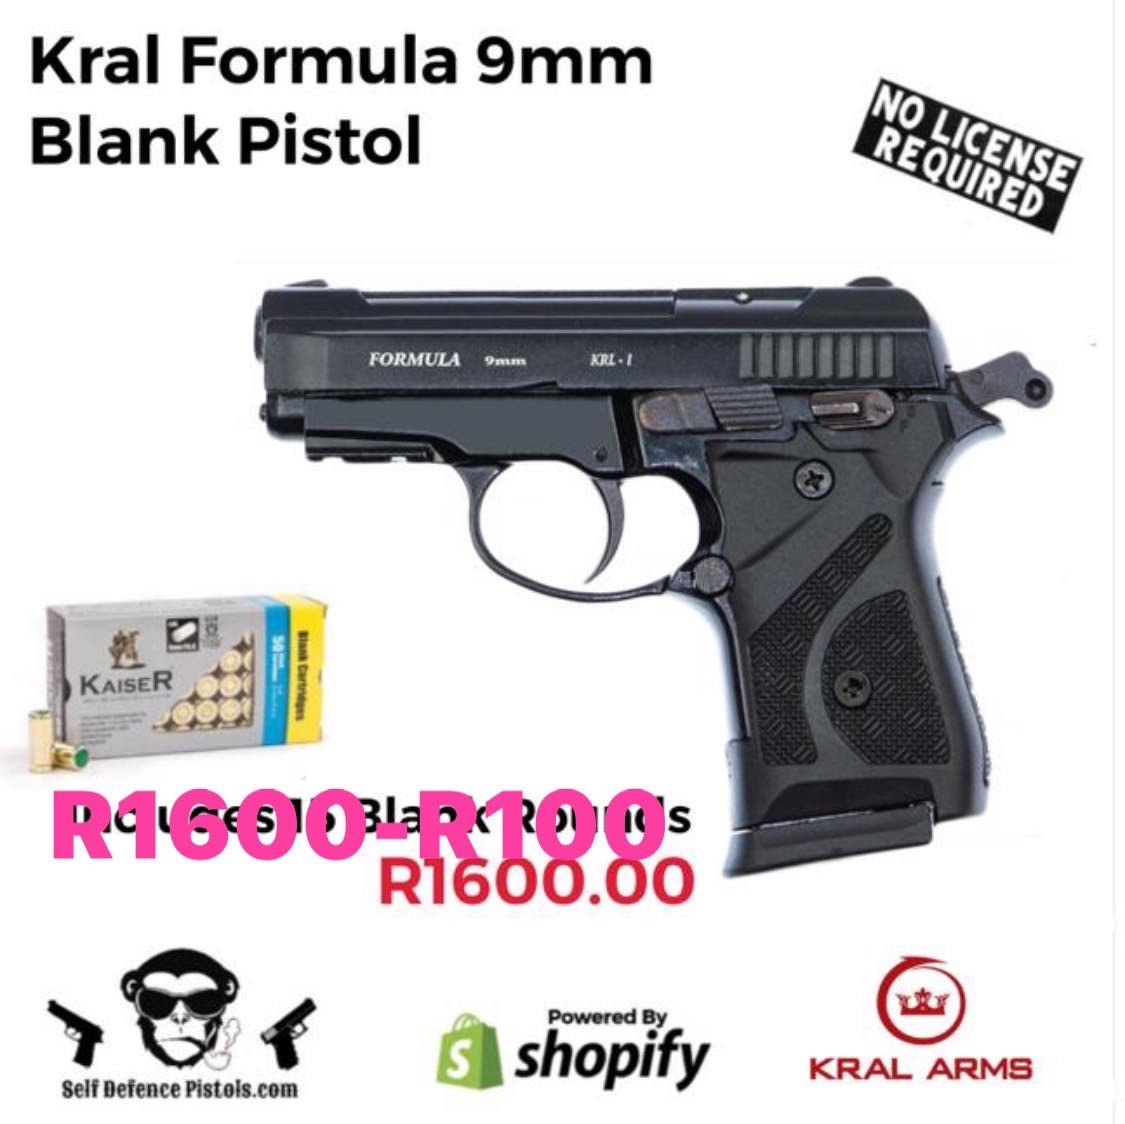 Blank 9 mm self defense pistols